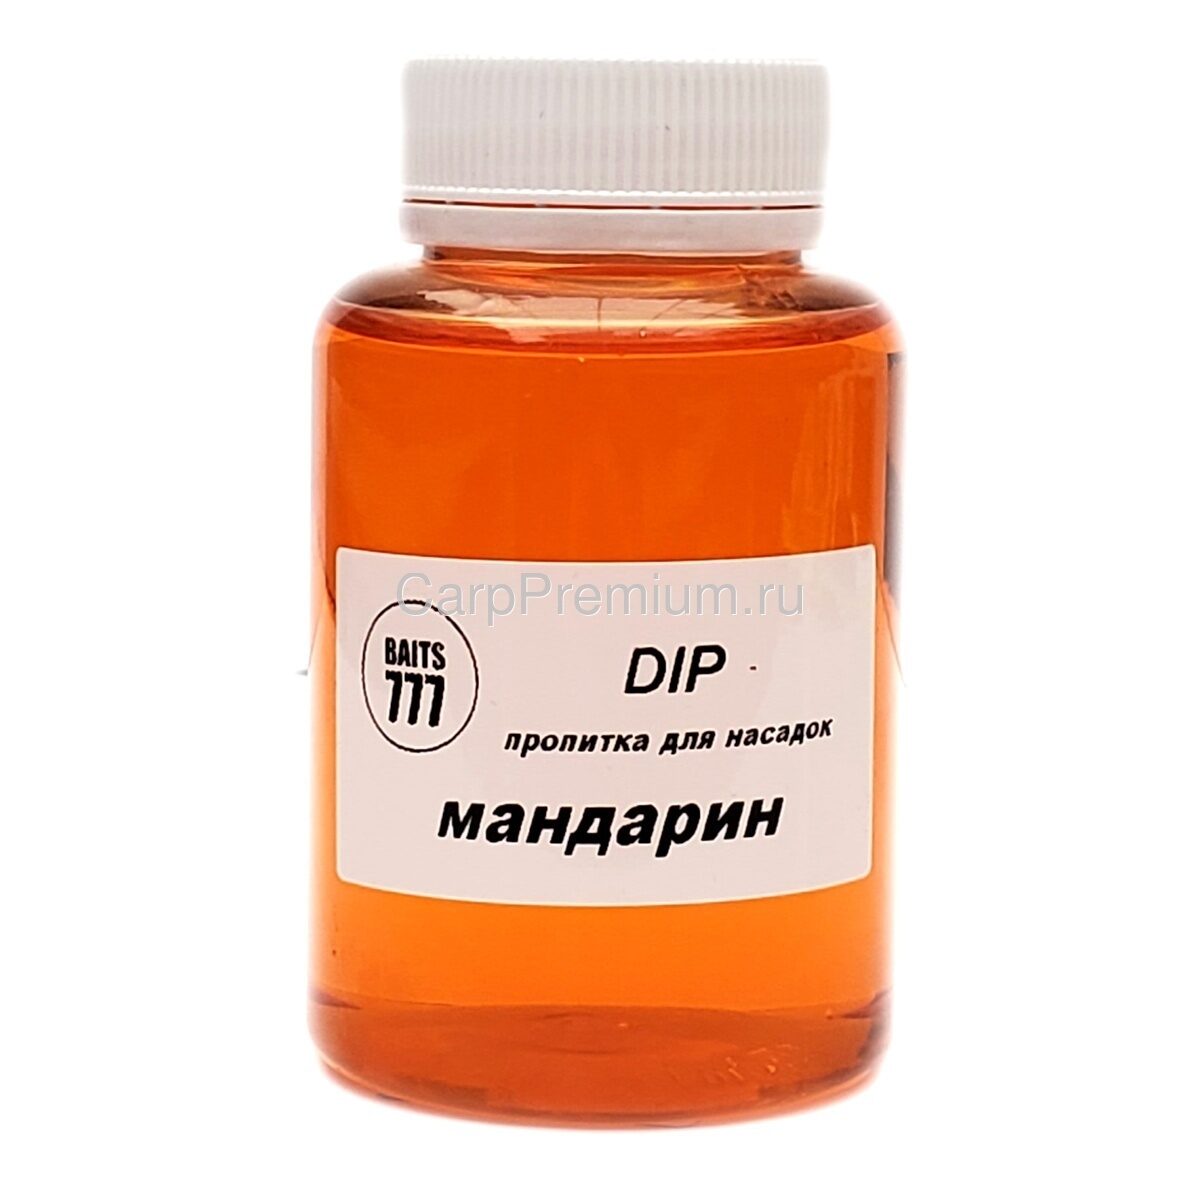 Дип Мандарин 777 Baits (Лихоносовы) - Likhonosov Tangerine Boilie Dip, 150 мл